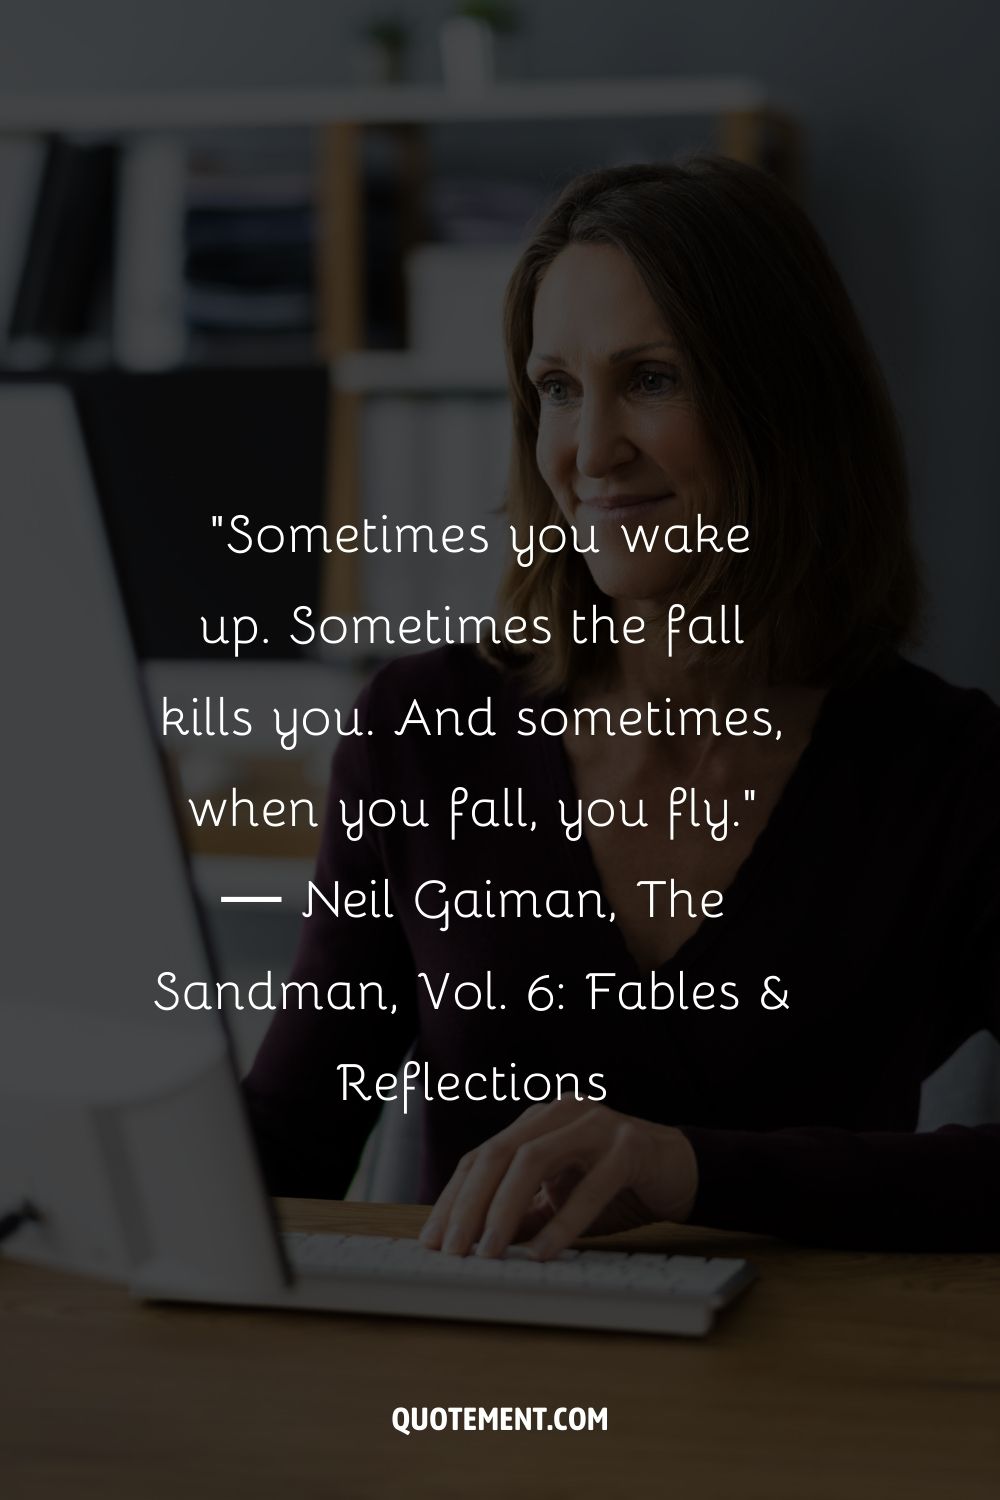 “Sometimes you wake up. Sometimes the fall kills you. And sometimes, when you fall, you fly.” ― Neil Gaiman, The Sandman, Vol. 6 Fables & Reflections